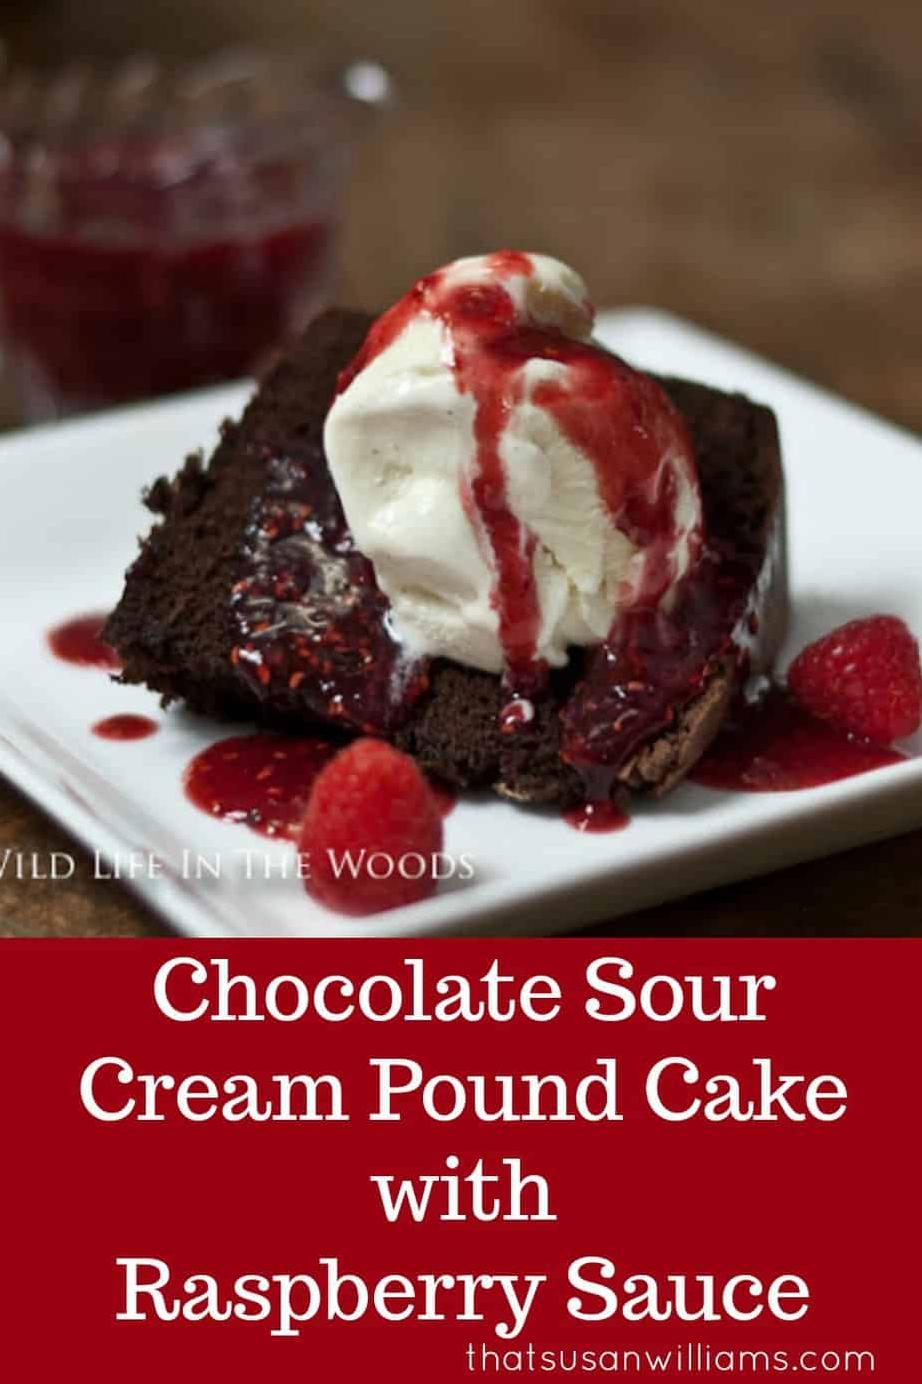 Delicious Sour Cream Pound Cake Recipe for Everyone